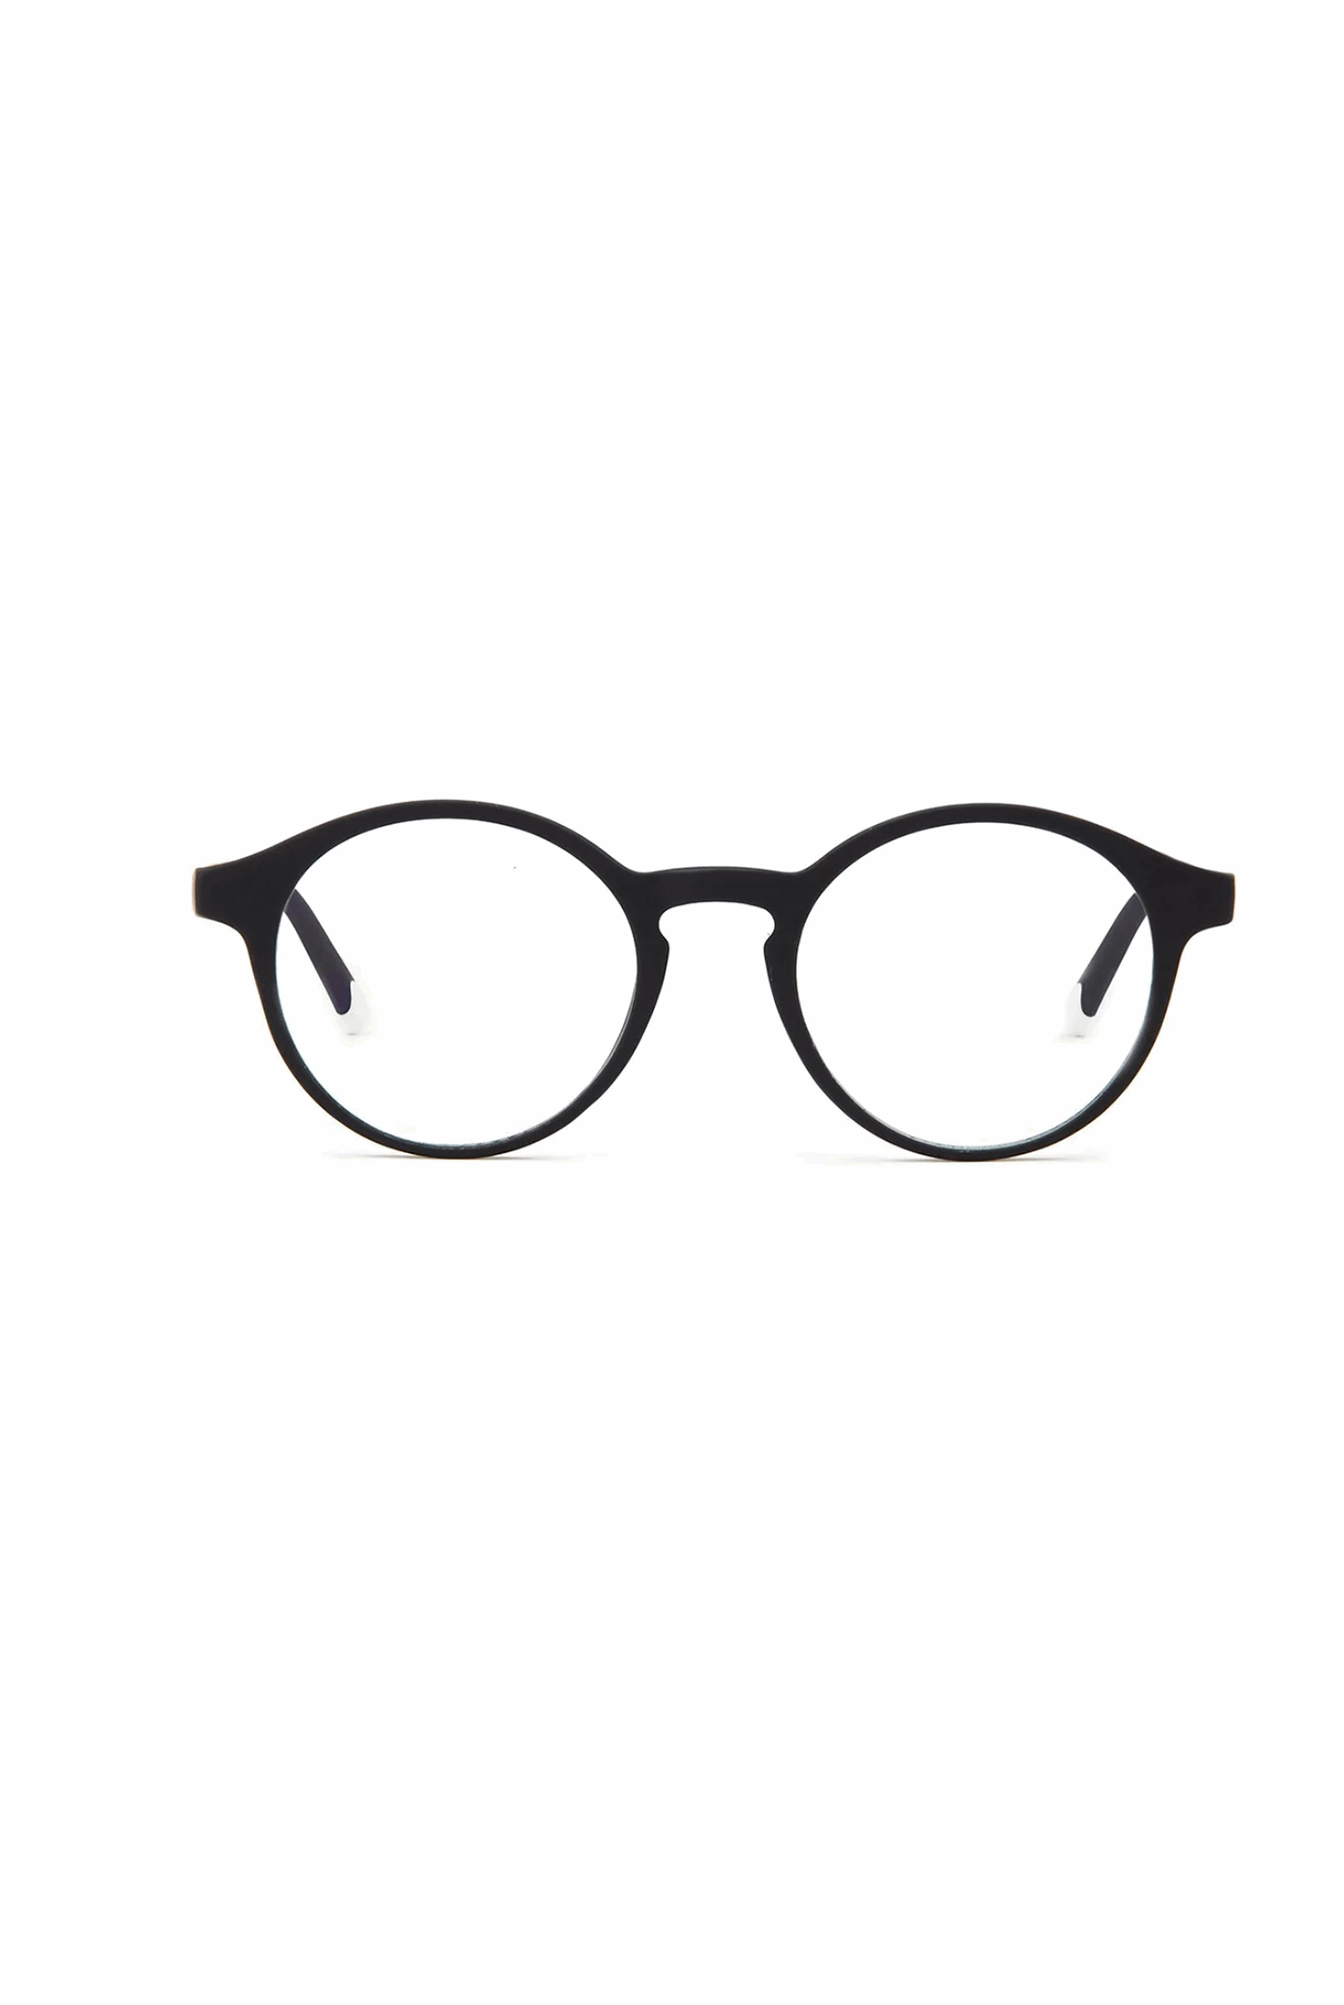 Barner - LE MARAIS - Neutral Glasses